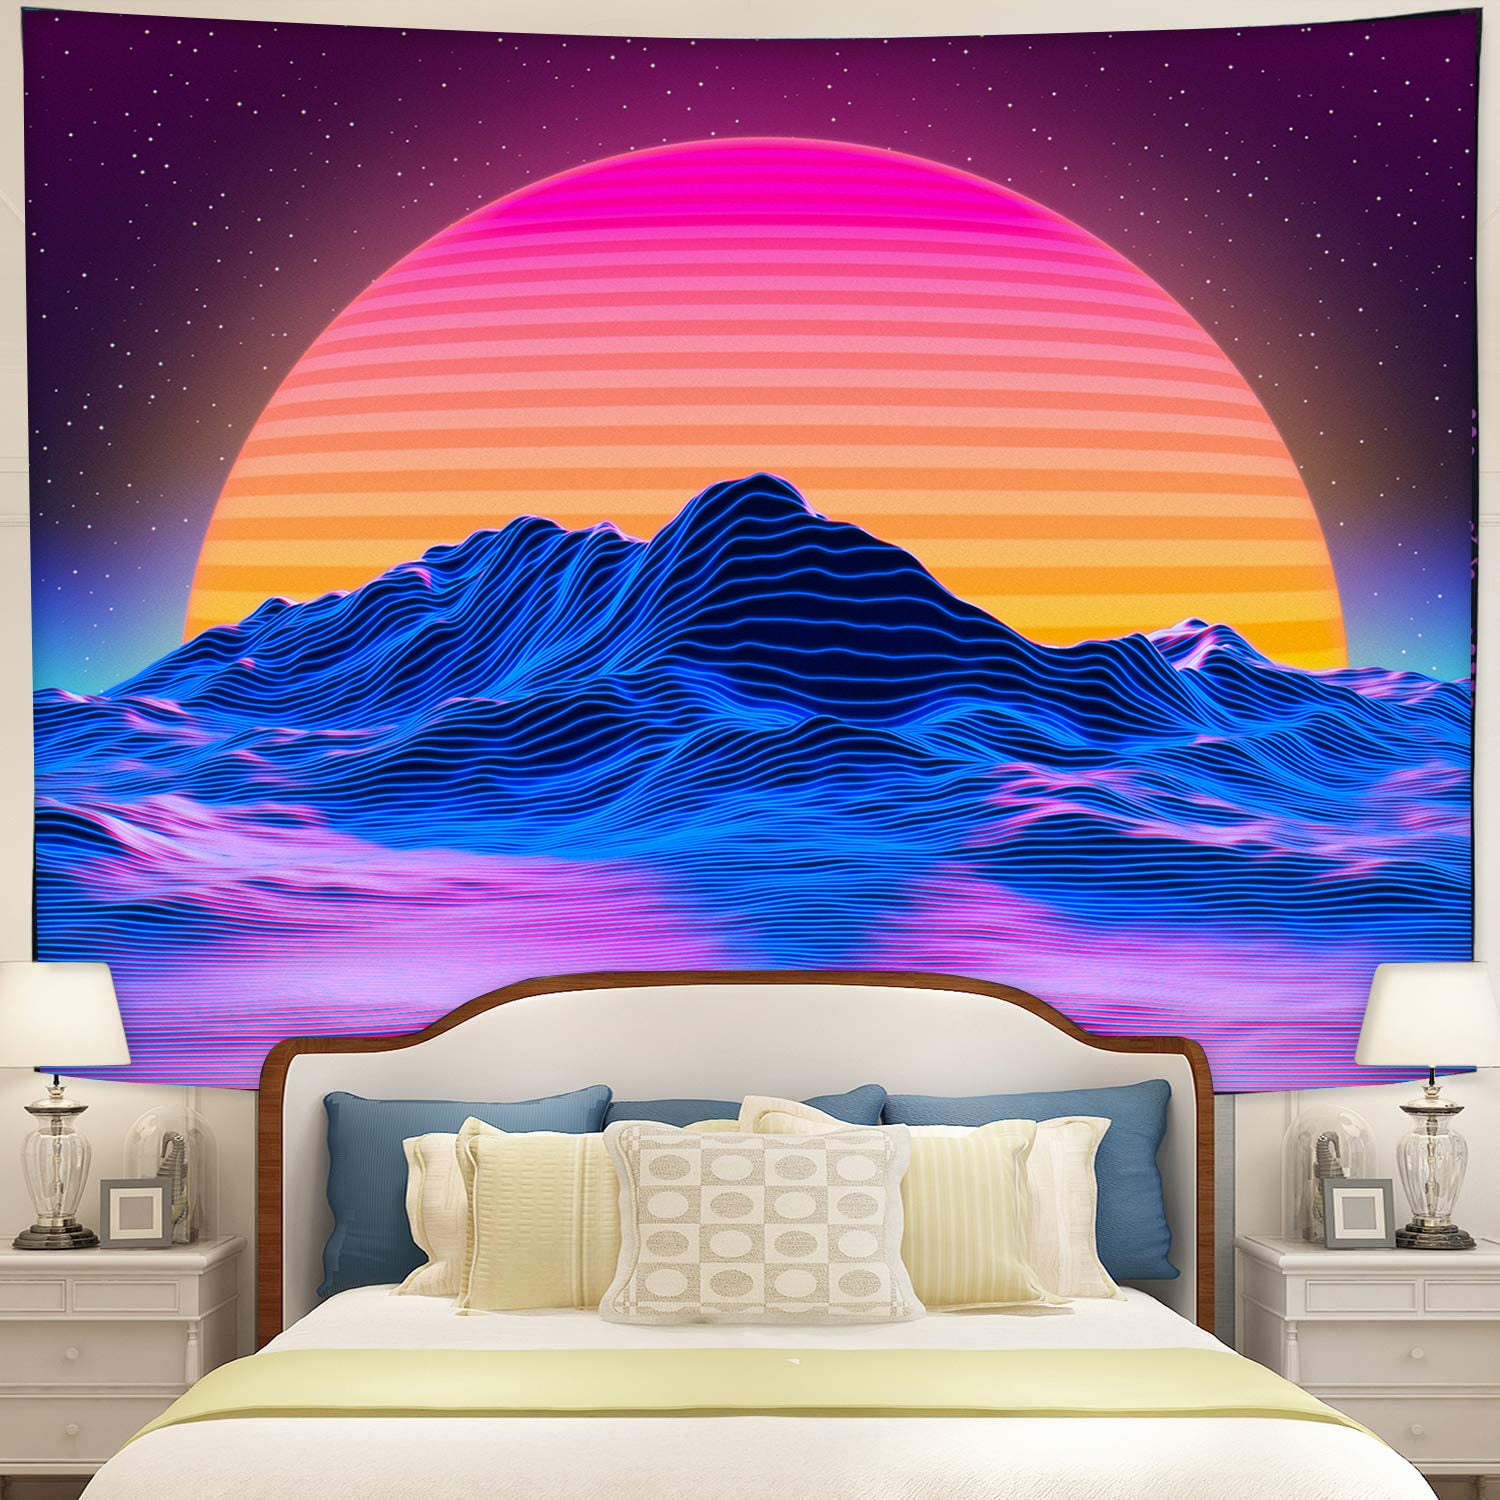 Retro Computer Aesthetic Sunset Tapestry Room Decor